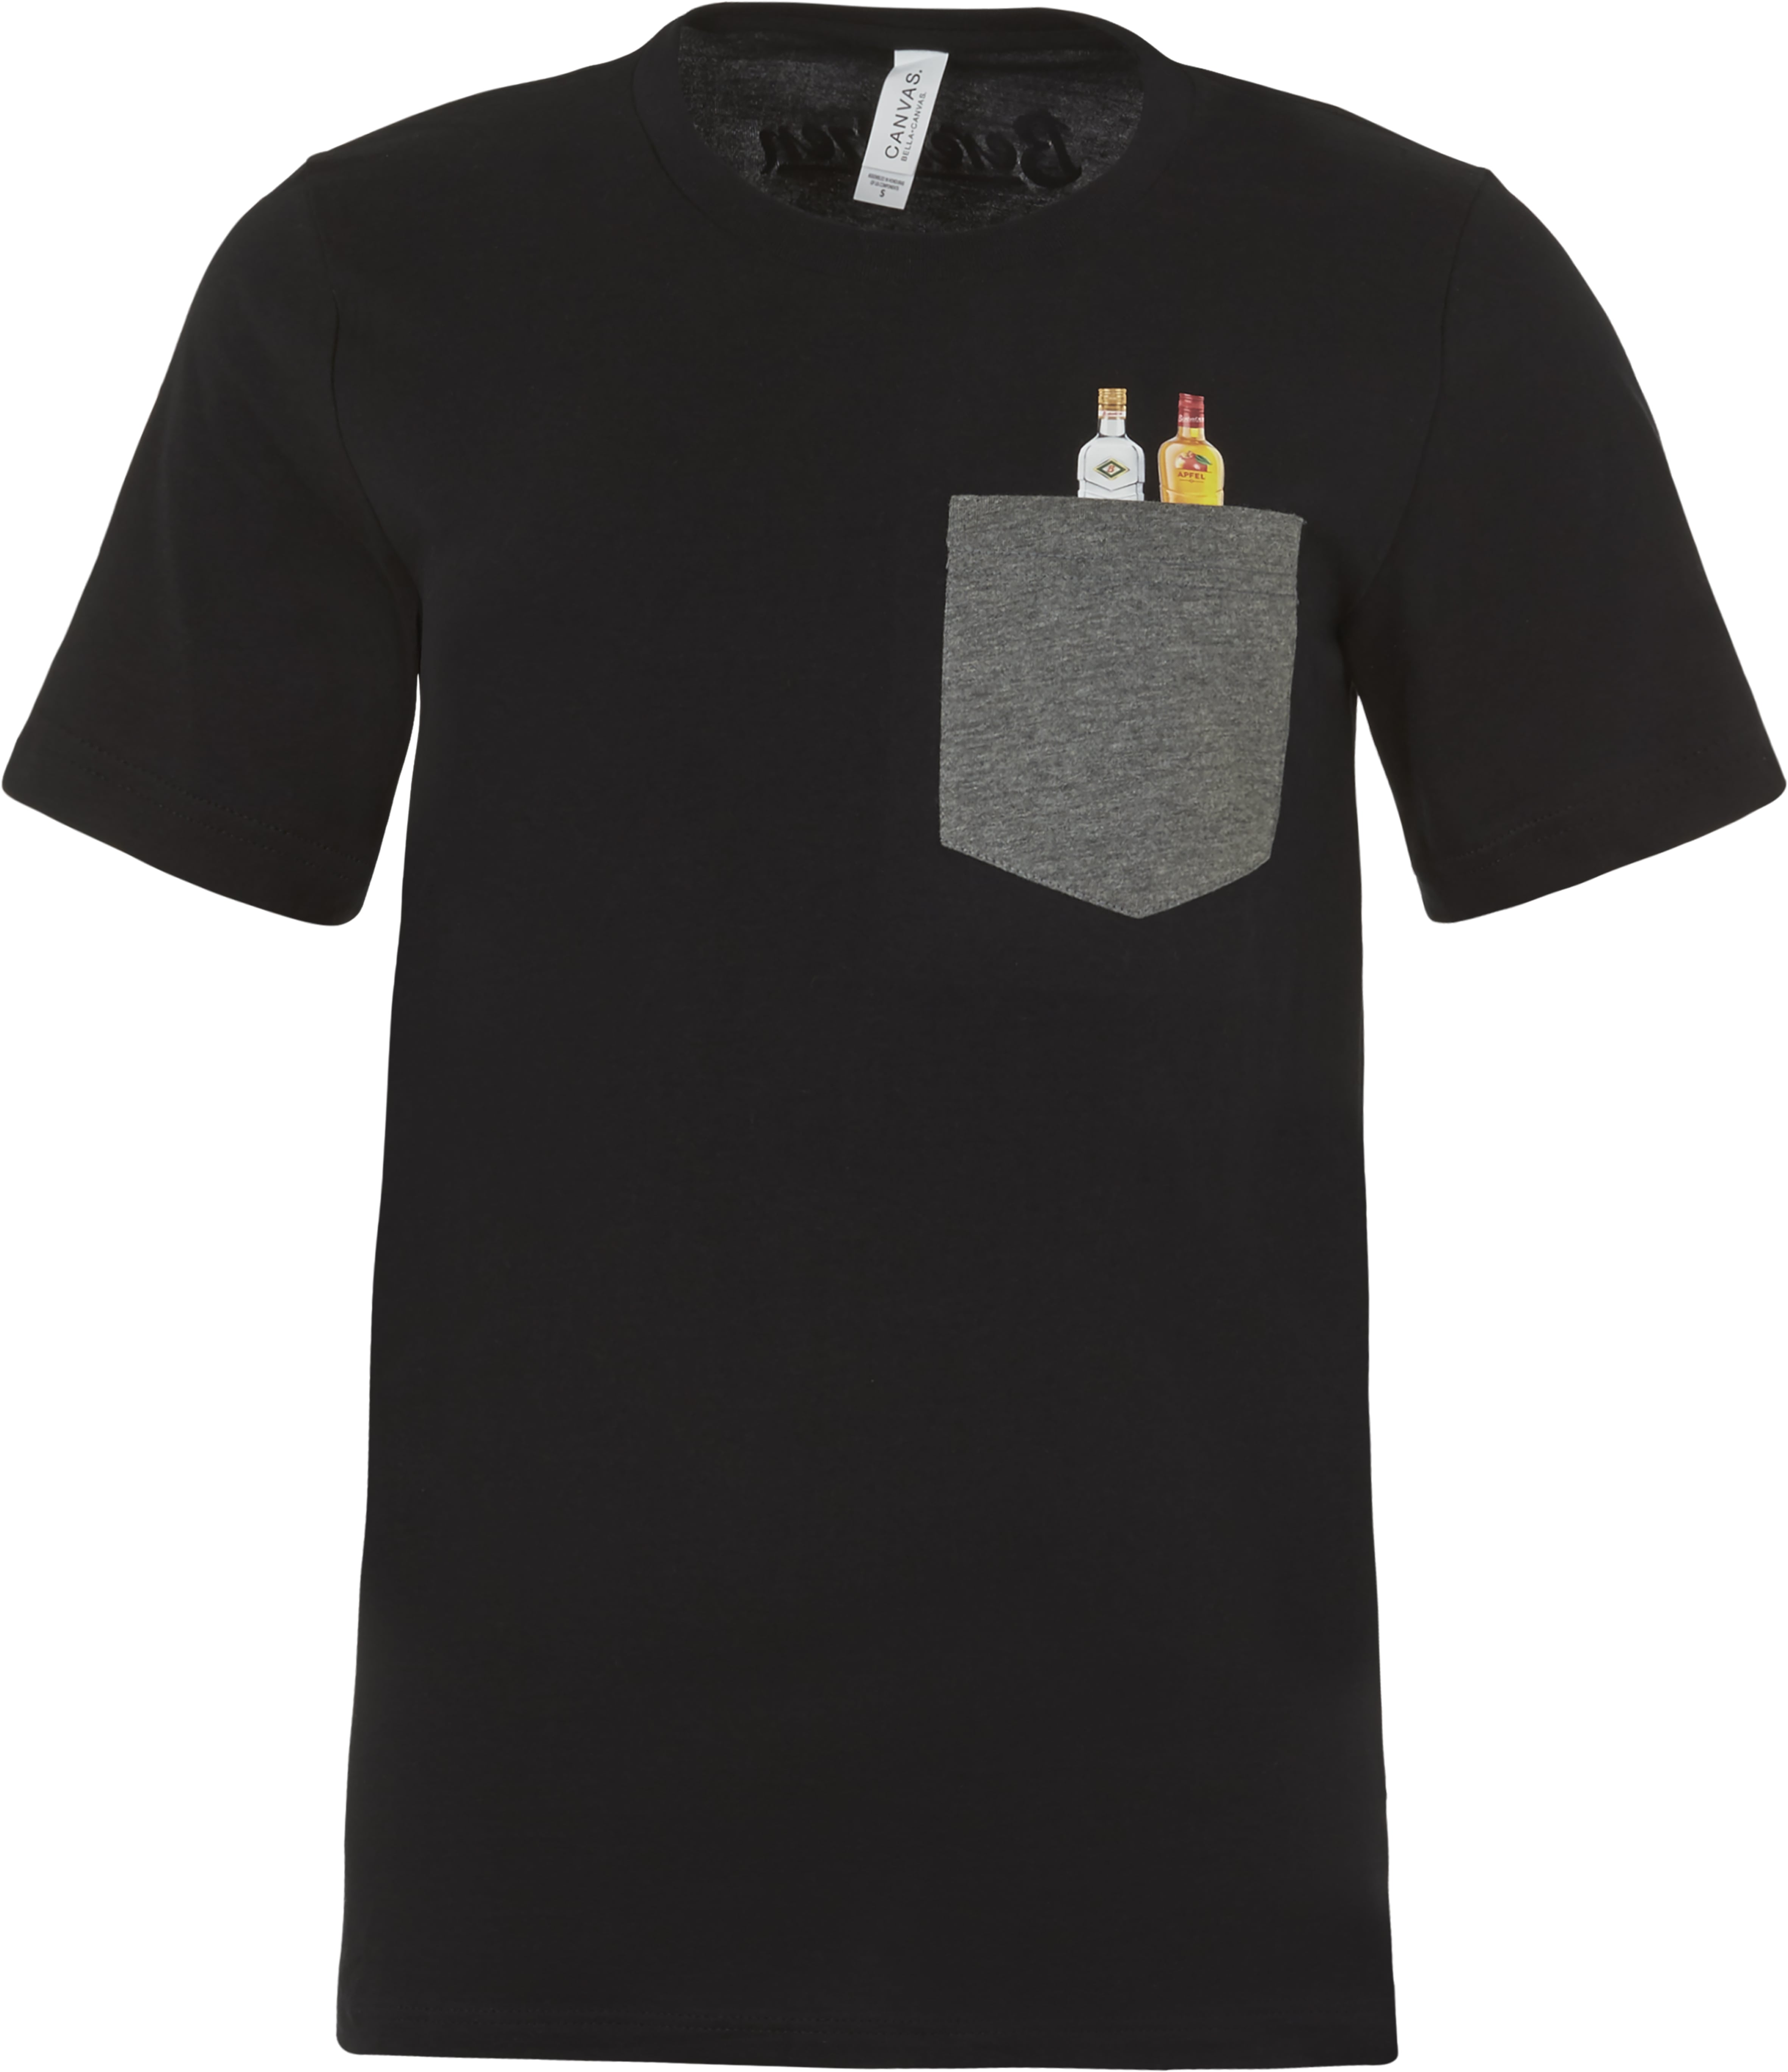 Berentzen T-Shirt Individualisierbar - Schwarz